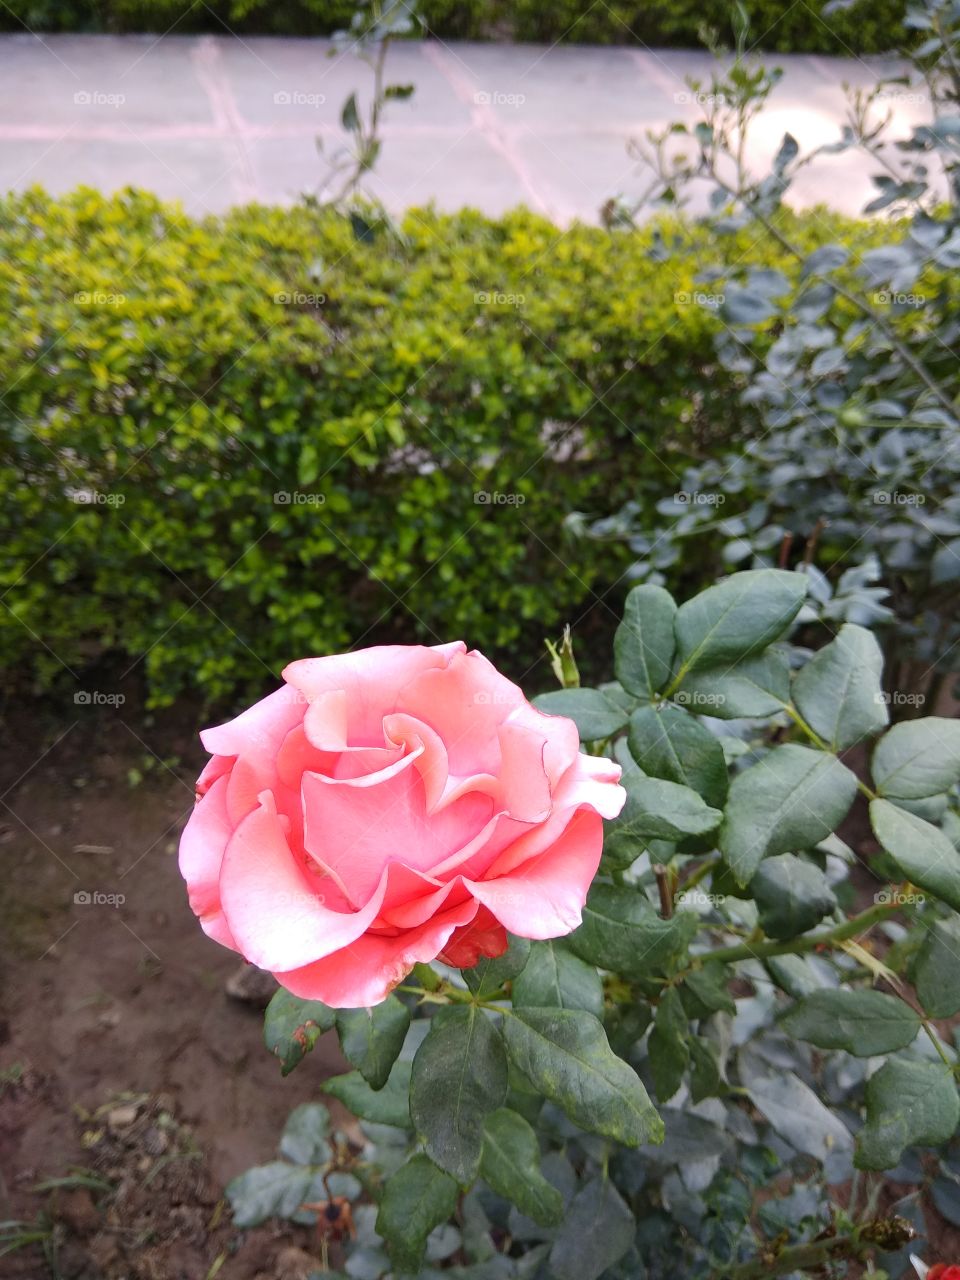 beautiful Rose flower